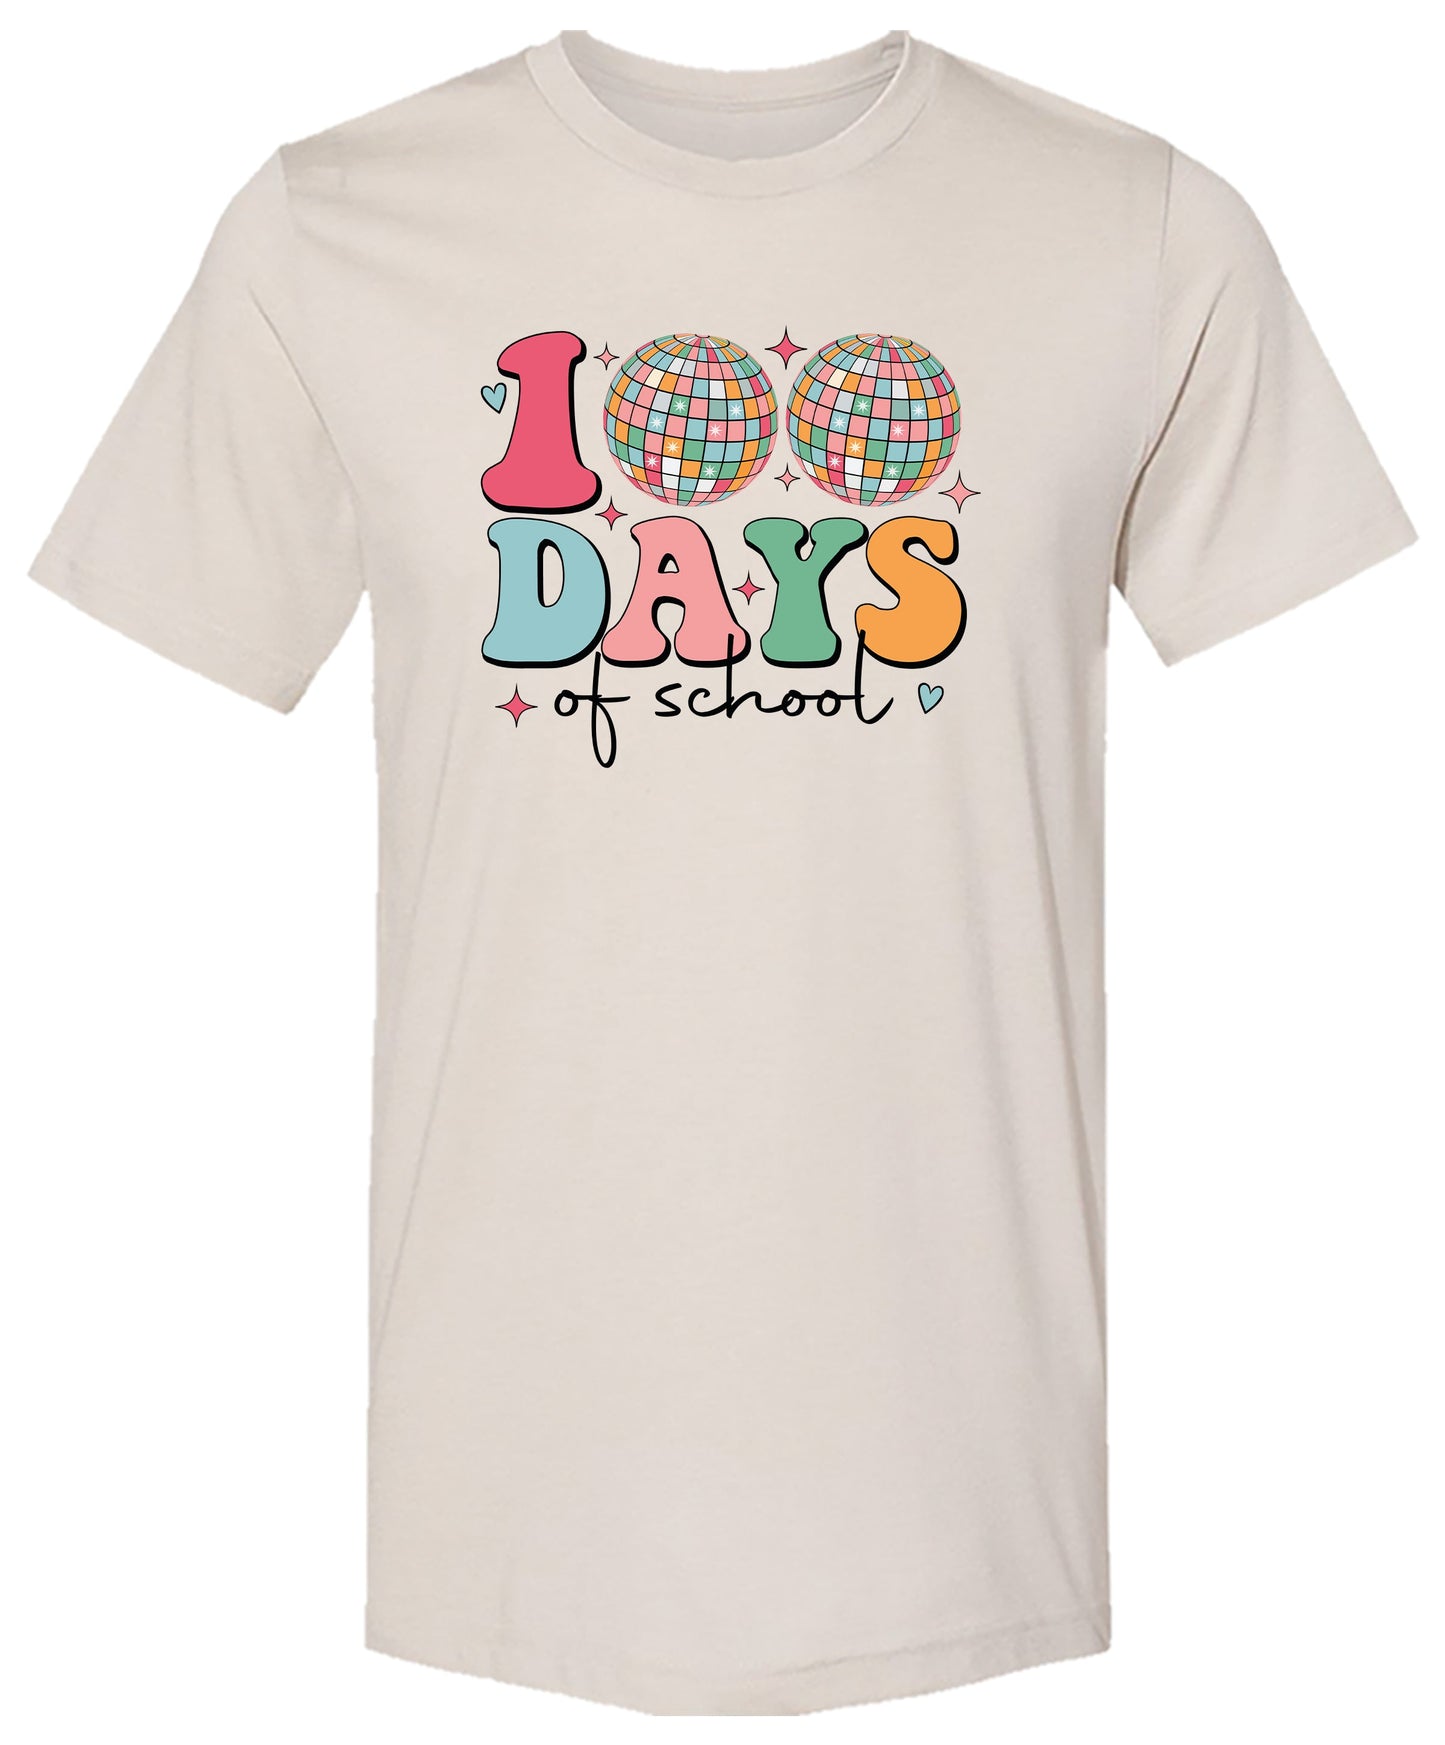 100 Days of Disco